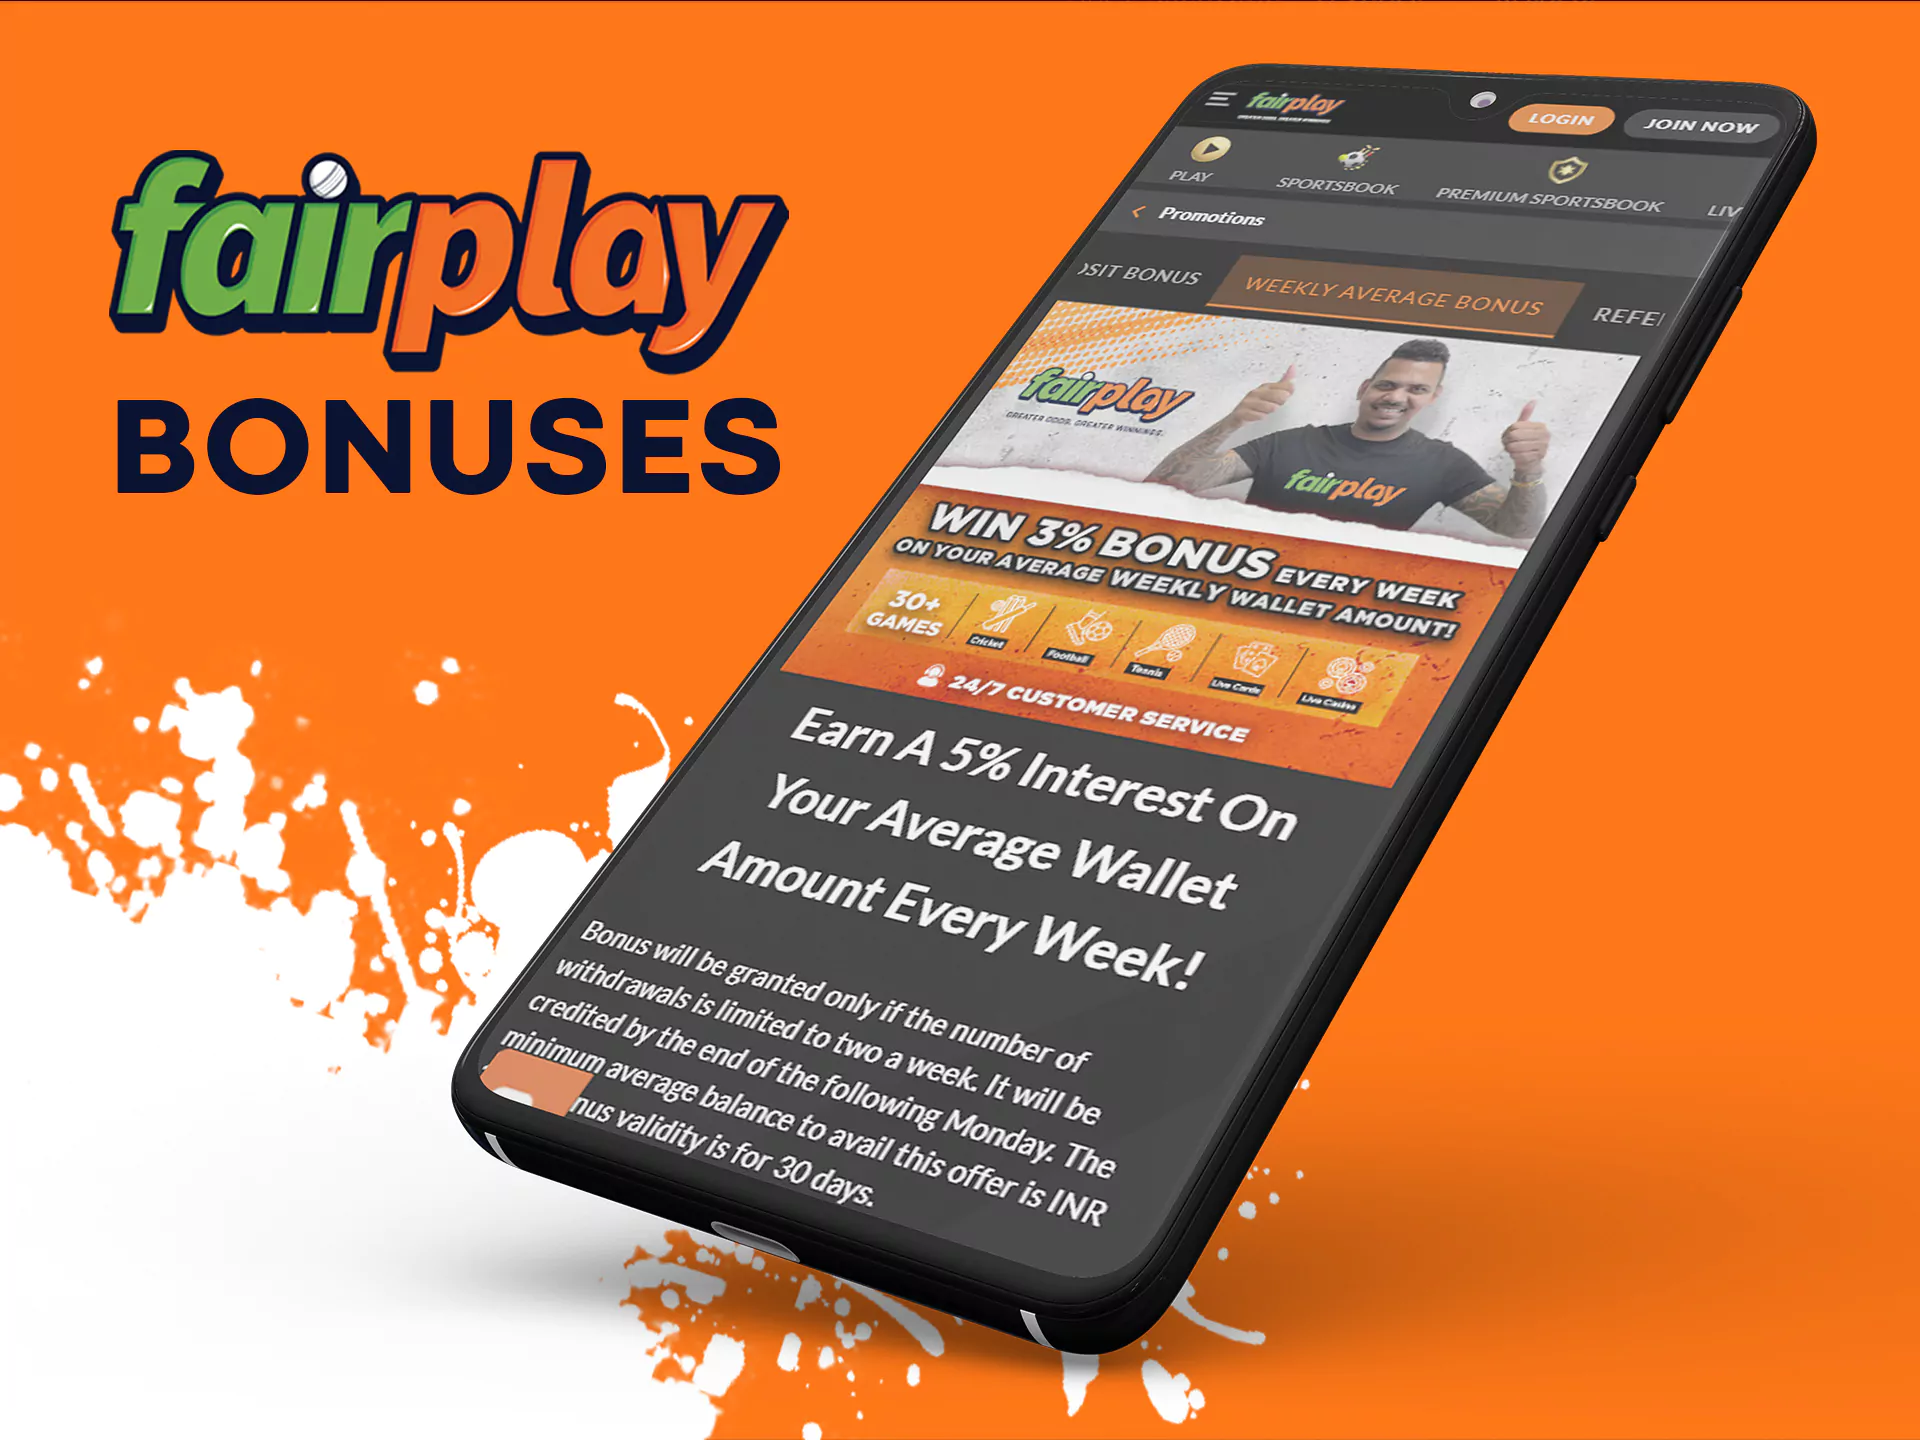 Fairplay allows you to get bonuses.